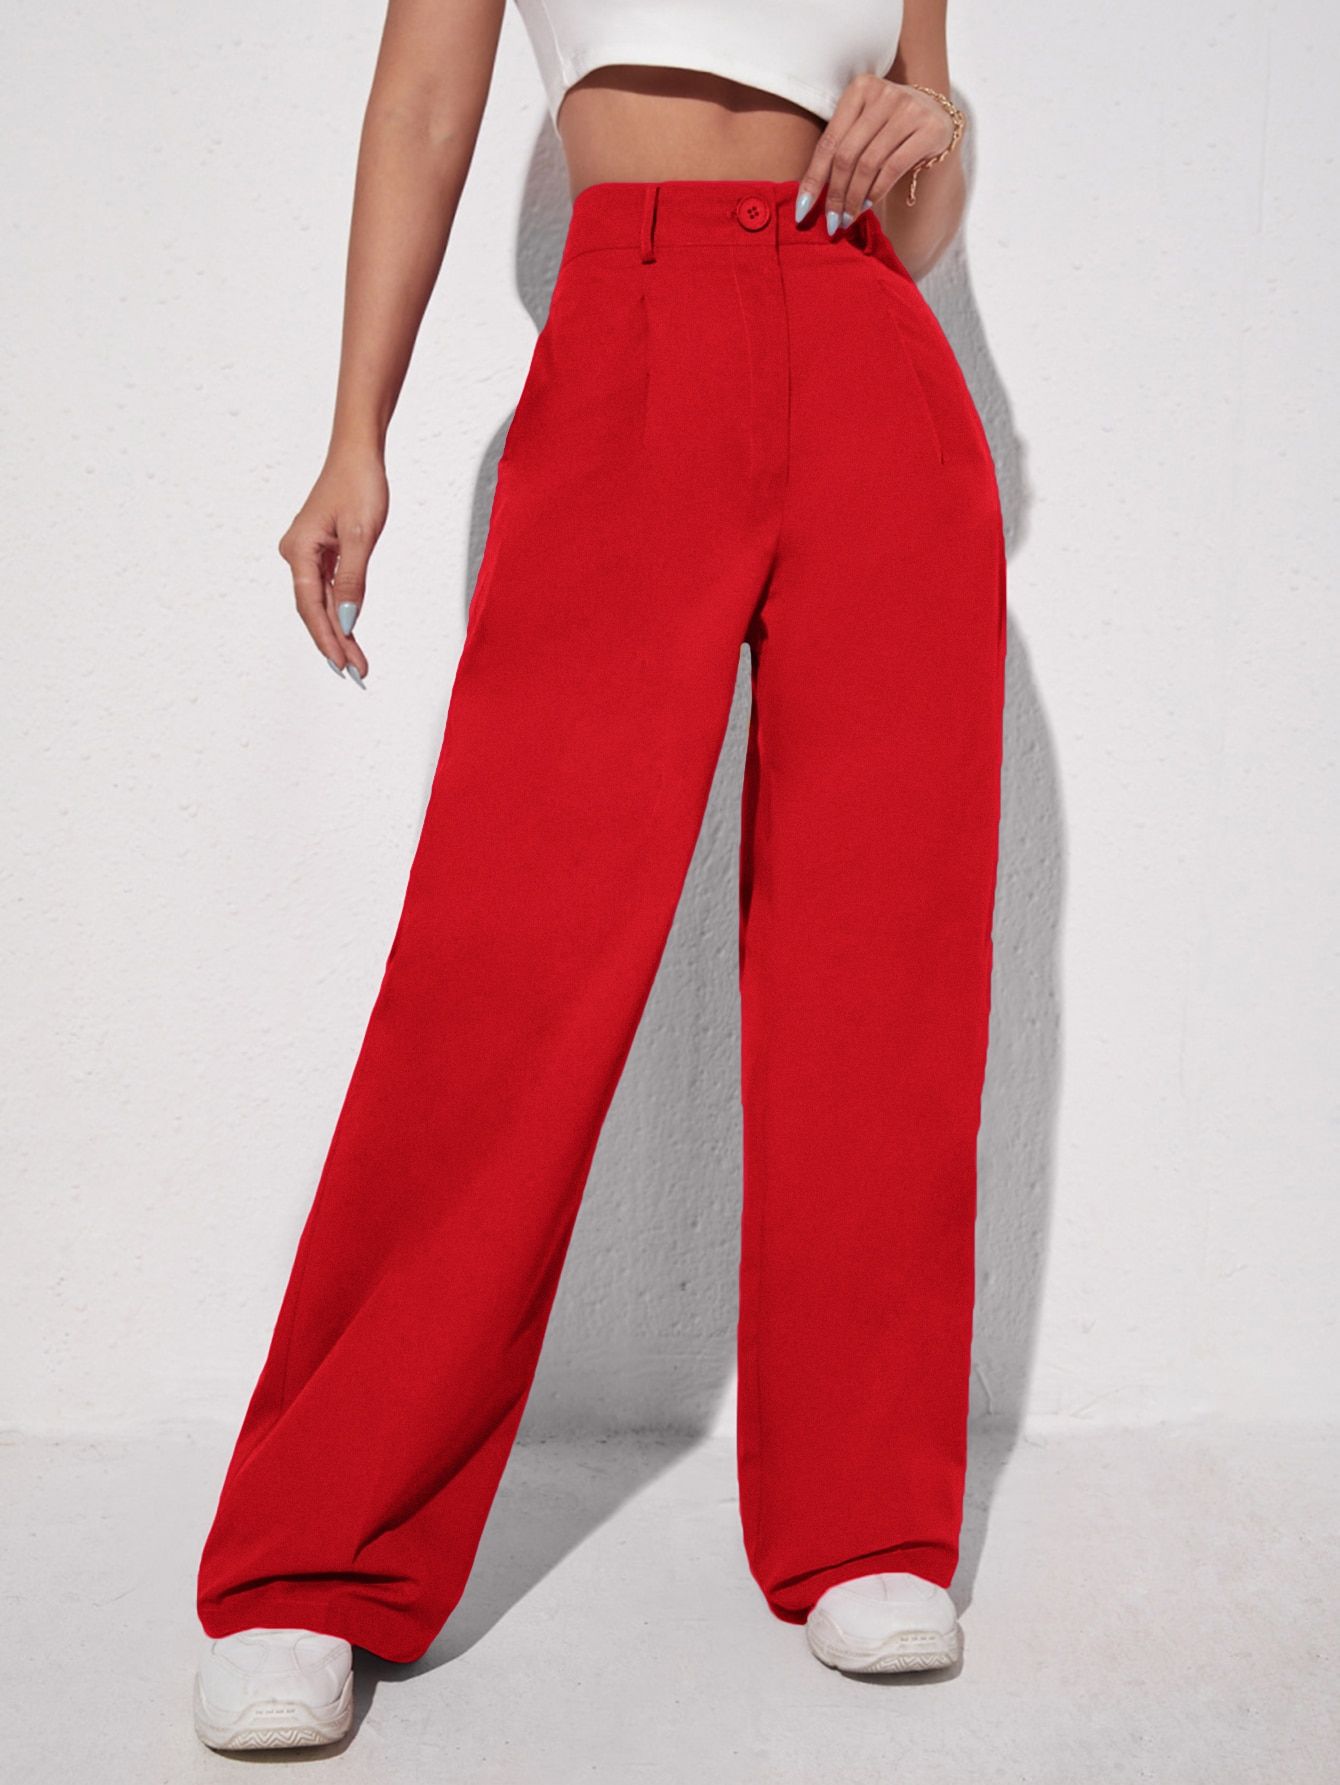 SHEIN EZwear Women's Solid Color Casual Long Pants | SHEIN